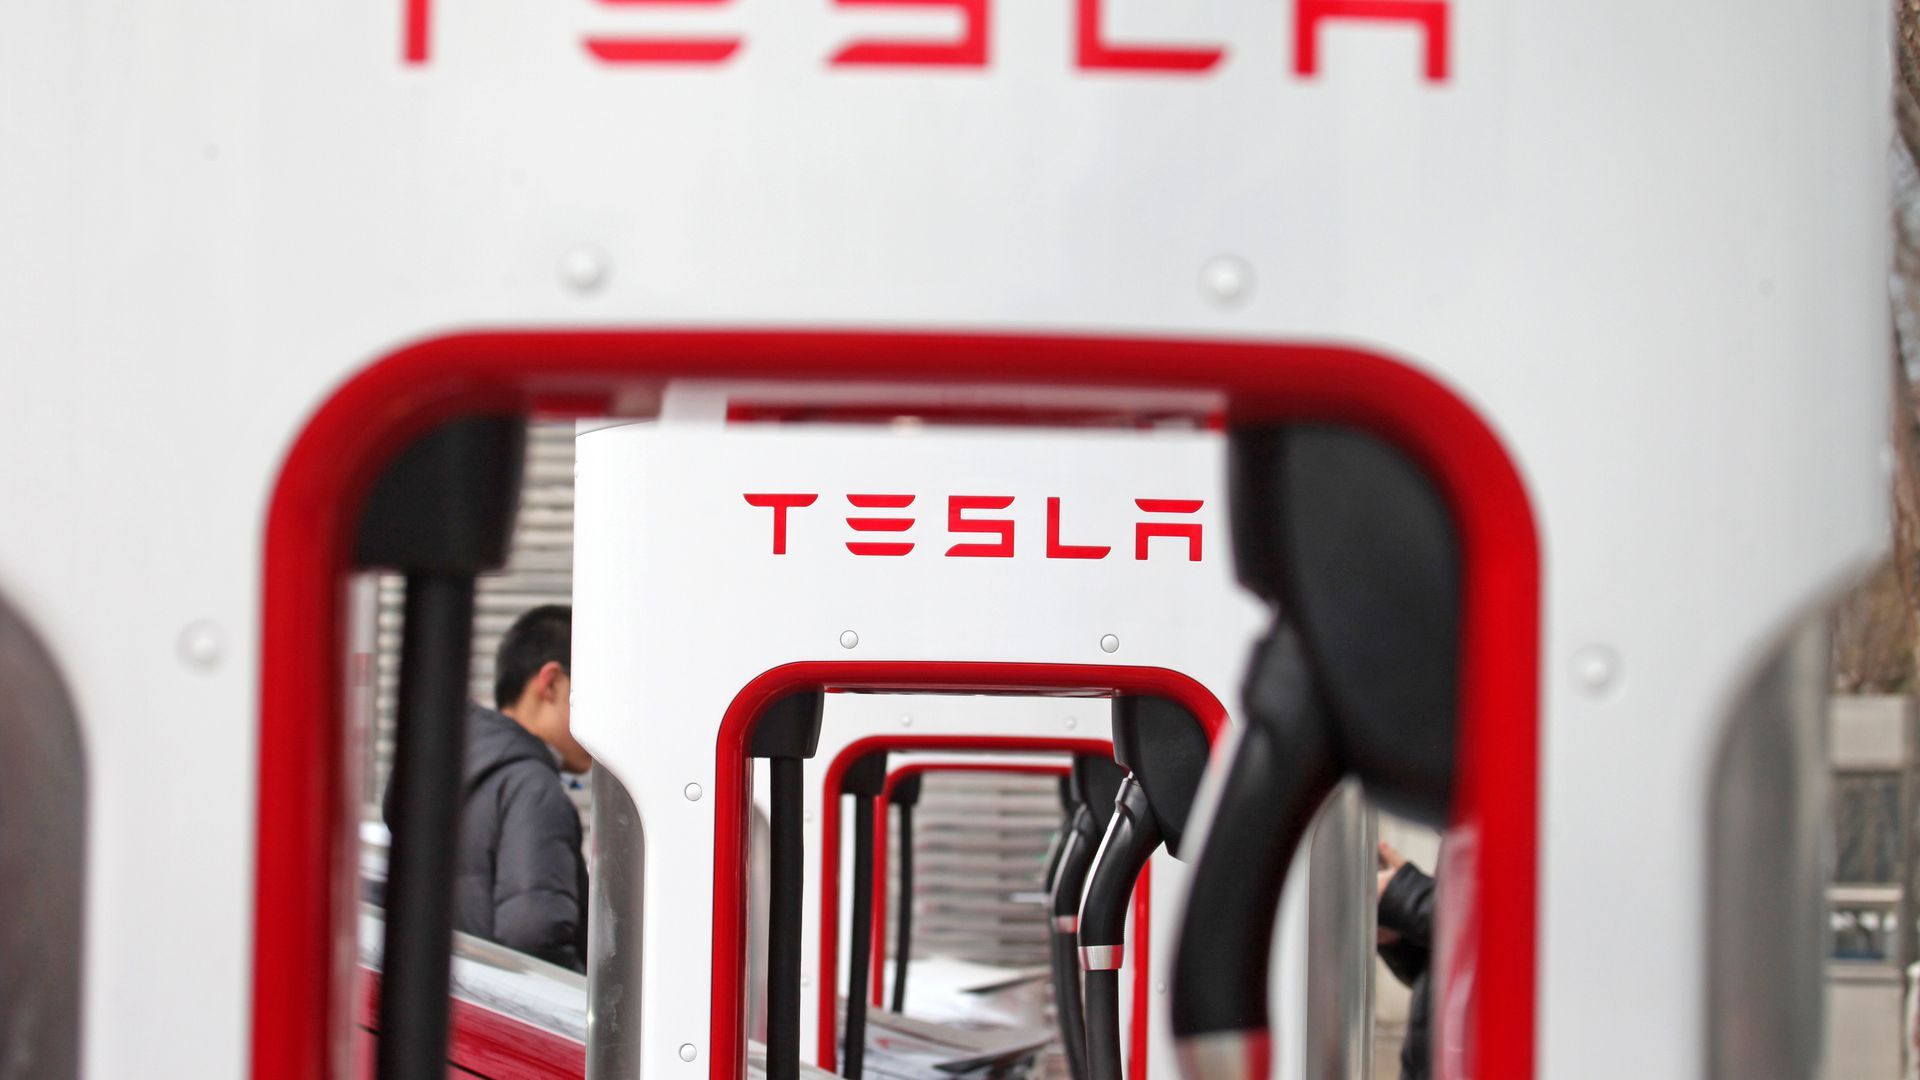 A Tesla charging station in Tianjin, China.